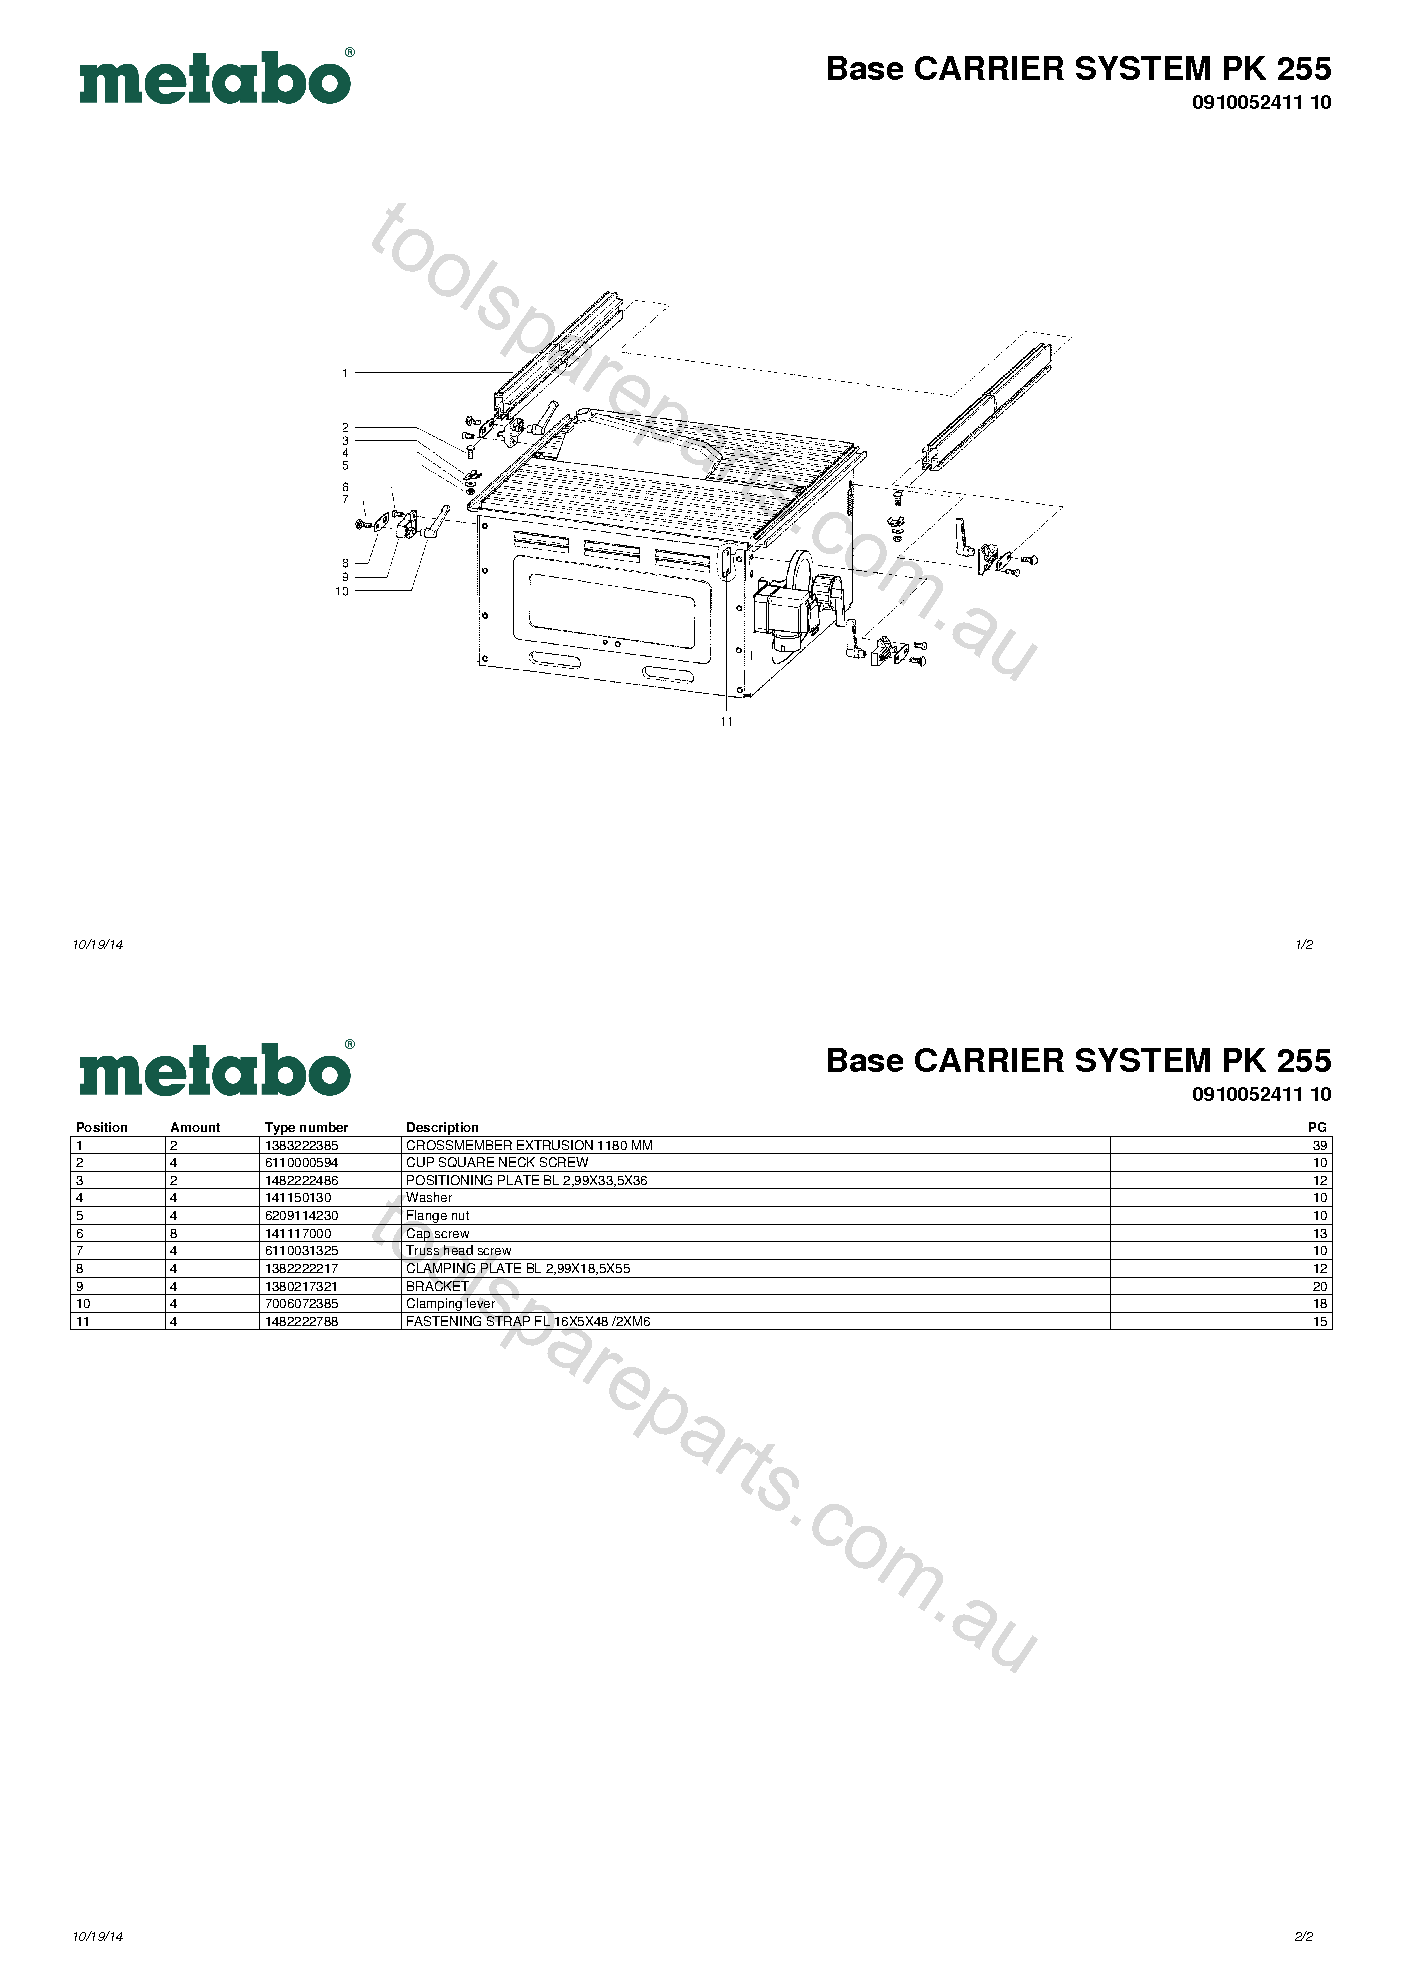 Metabo Base CARRIER SYSTEM PK 255 0910052411 10  Diagram 1